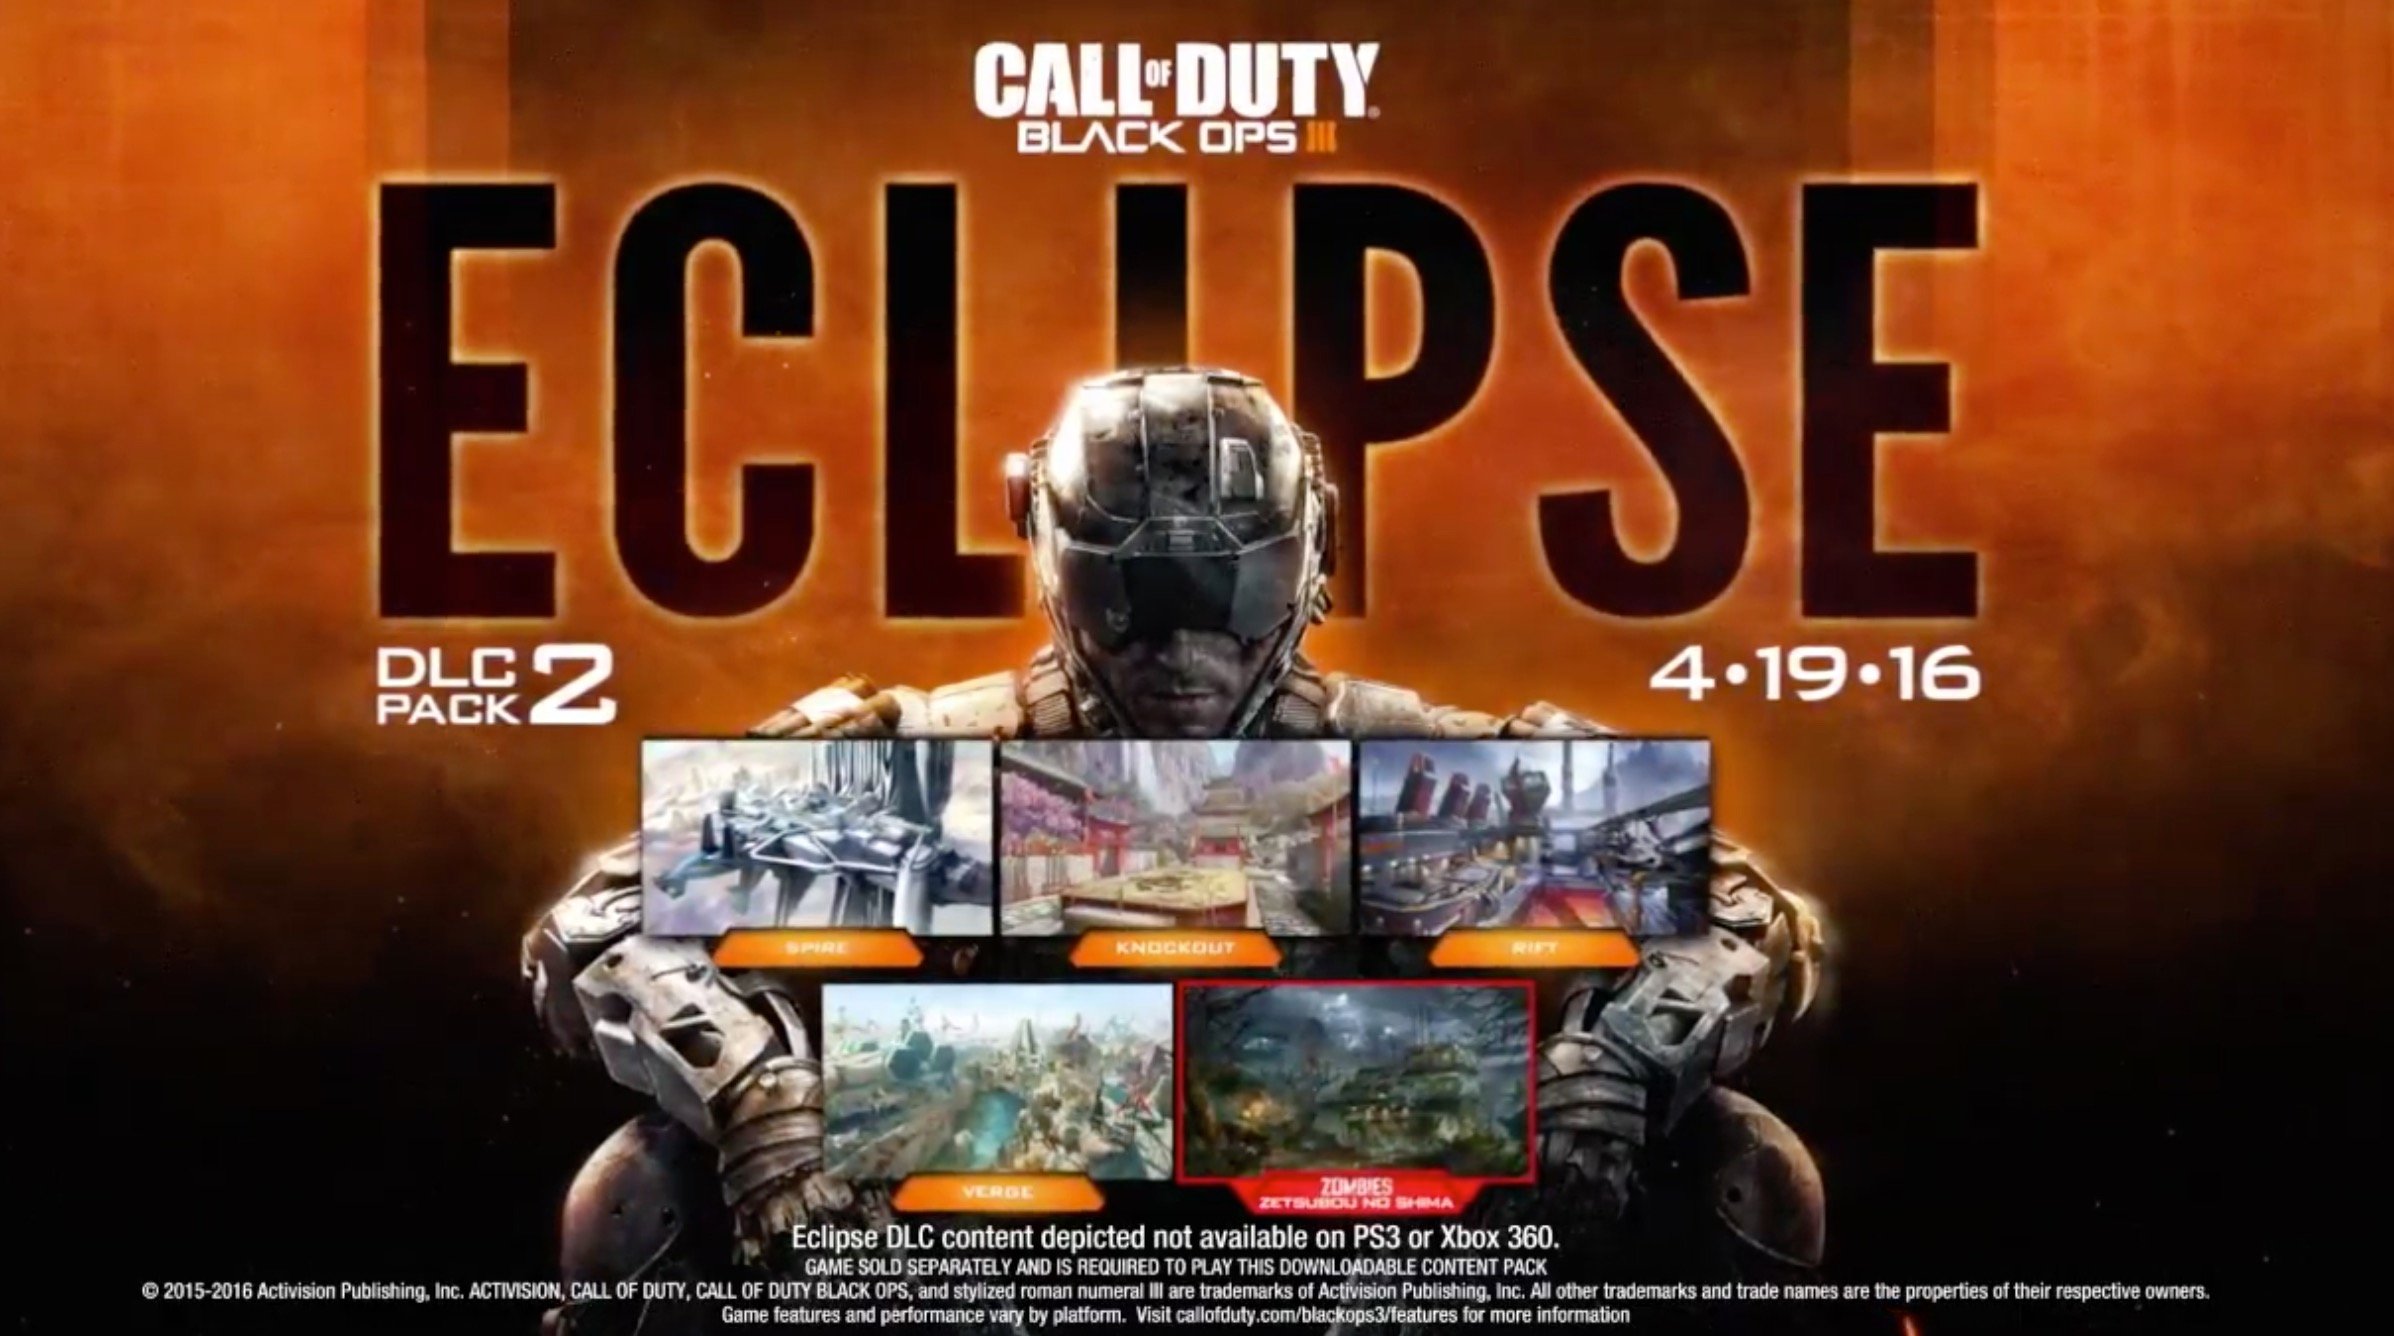 Ps3 в 2024. DLC Trial Pack Black ops 3. PLAYSTATION 4 Call of Duty Black ops 3. Call of Duty Black ops 3 диск. Call of Duty Black ops 3 Eclipse.